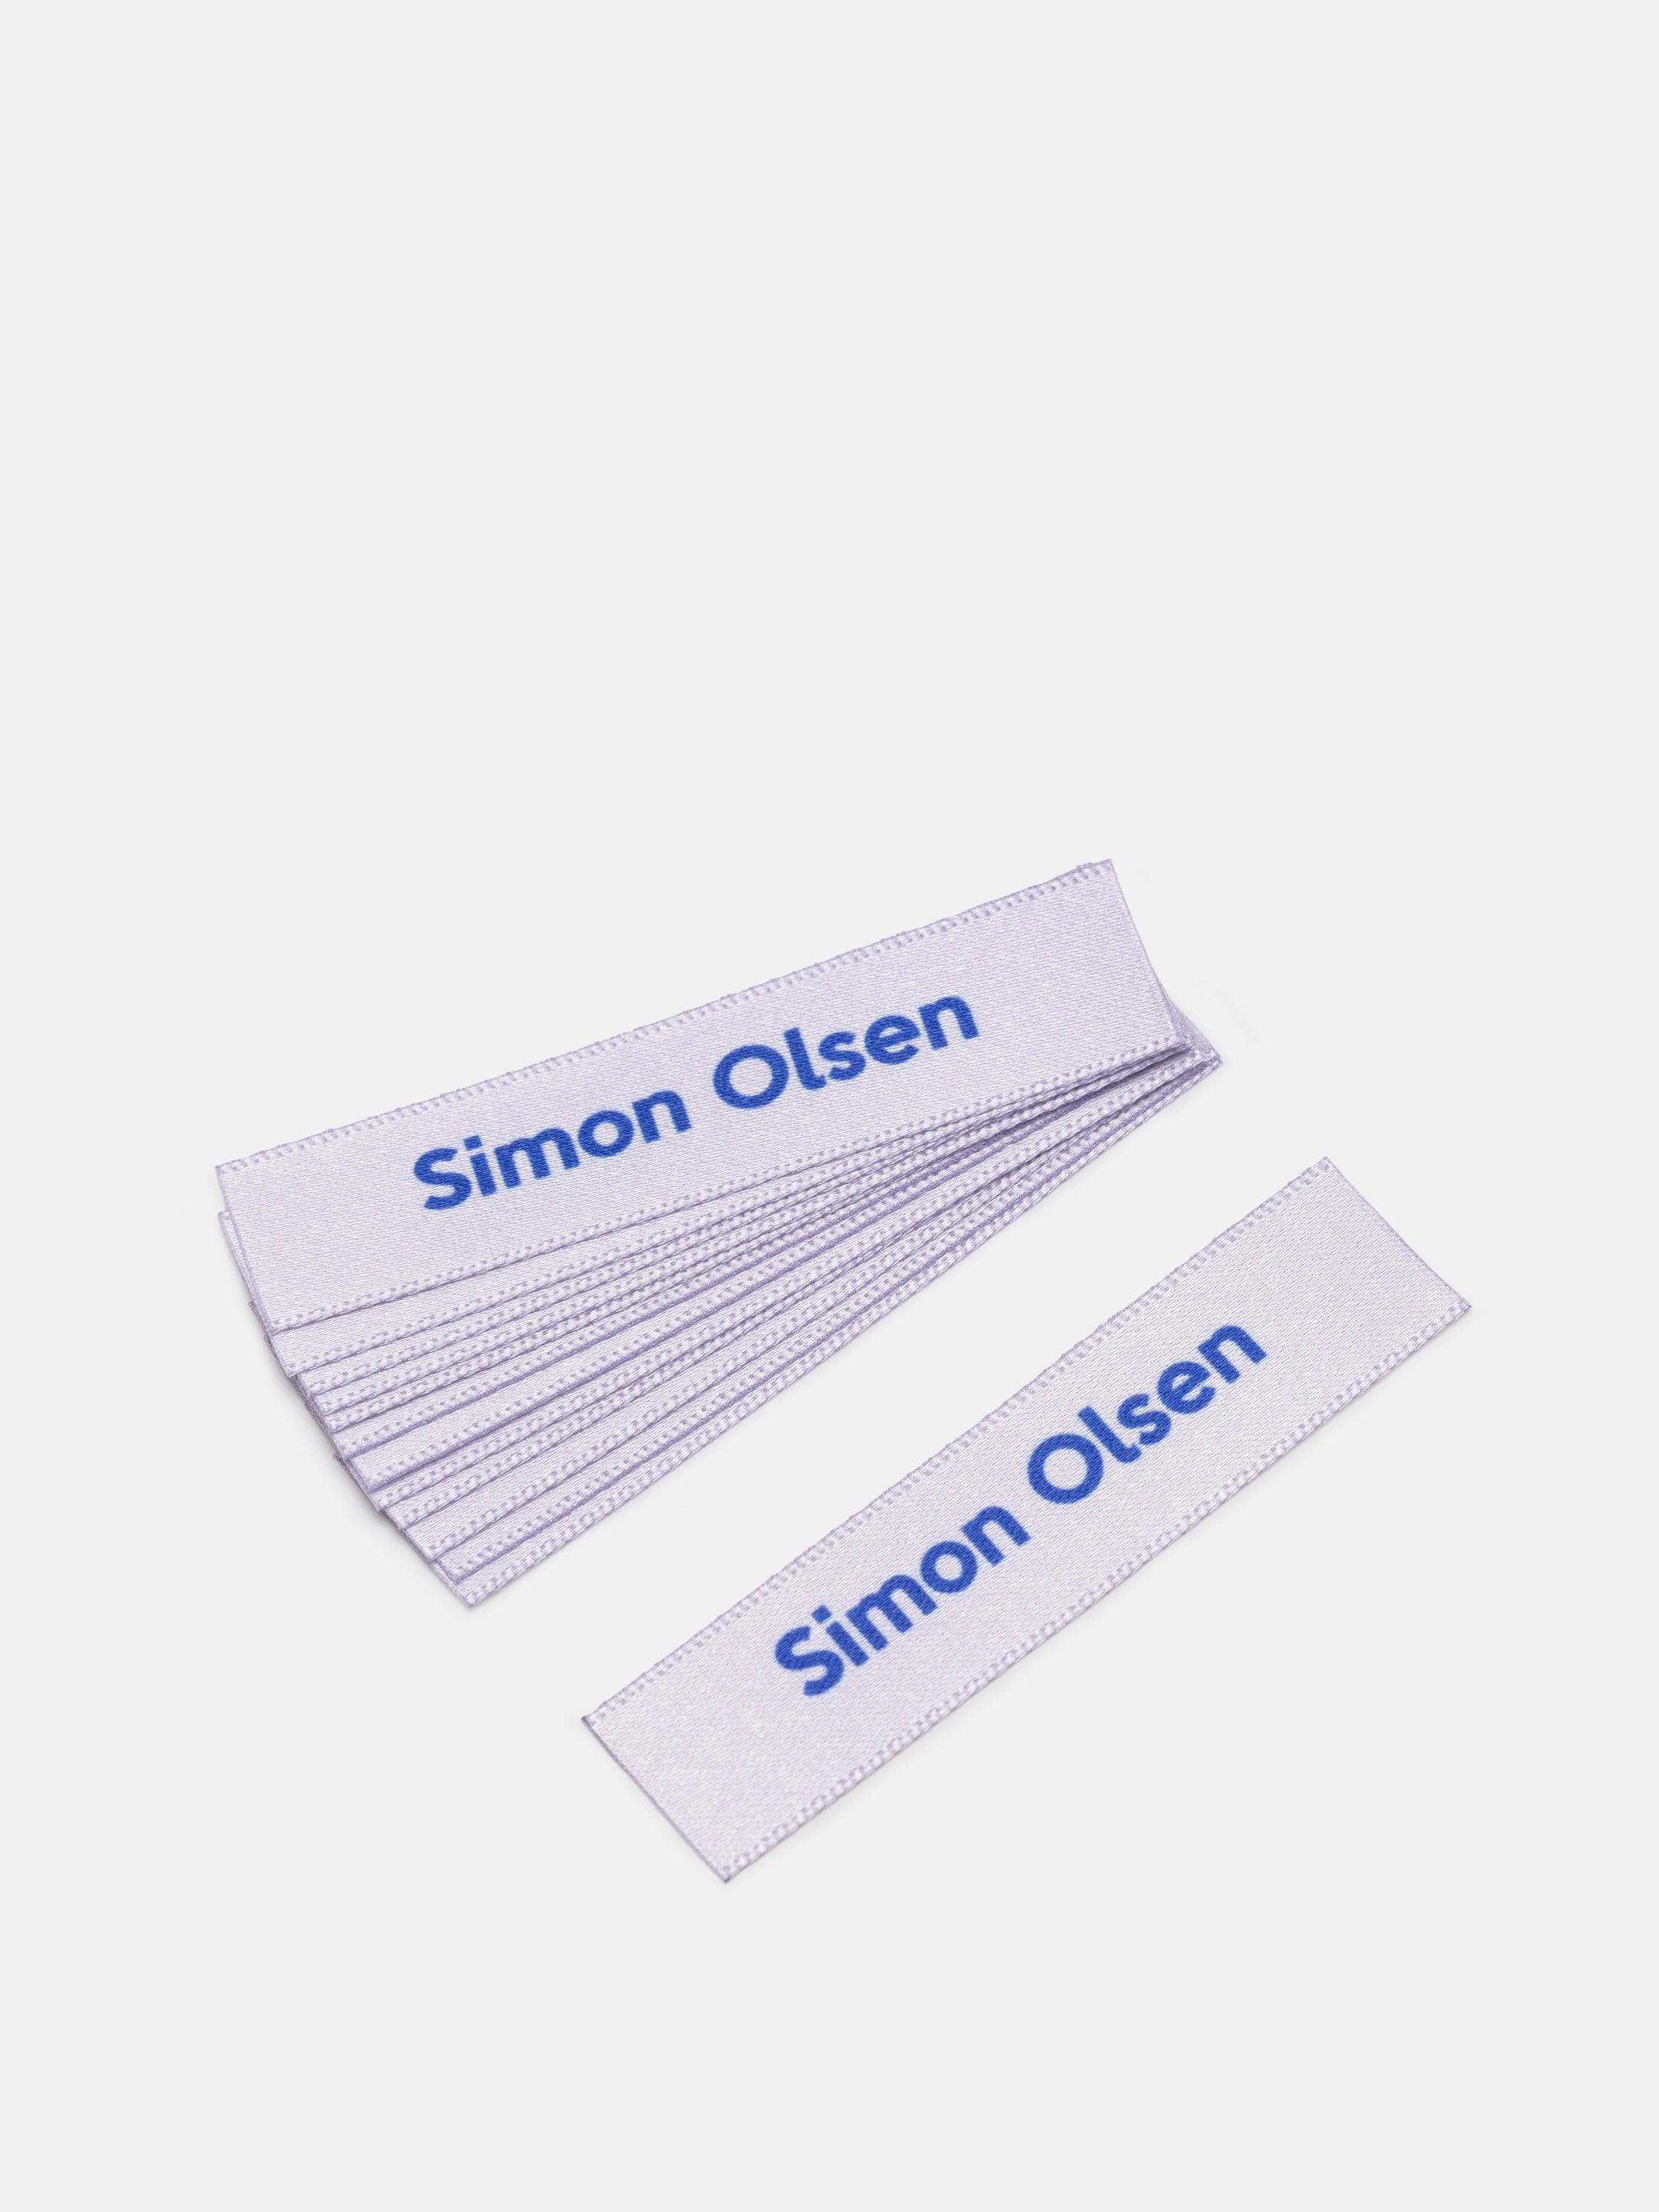 uniform name labels
packs